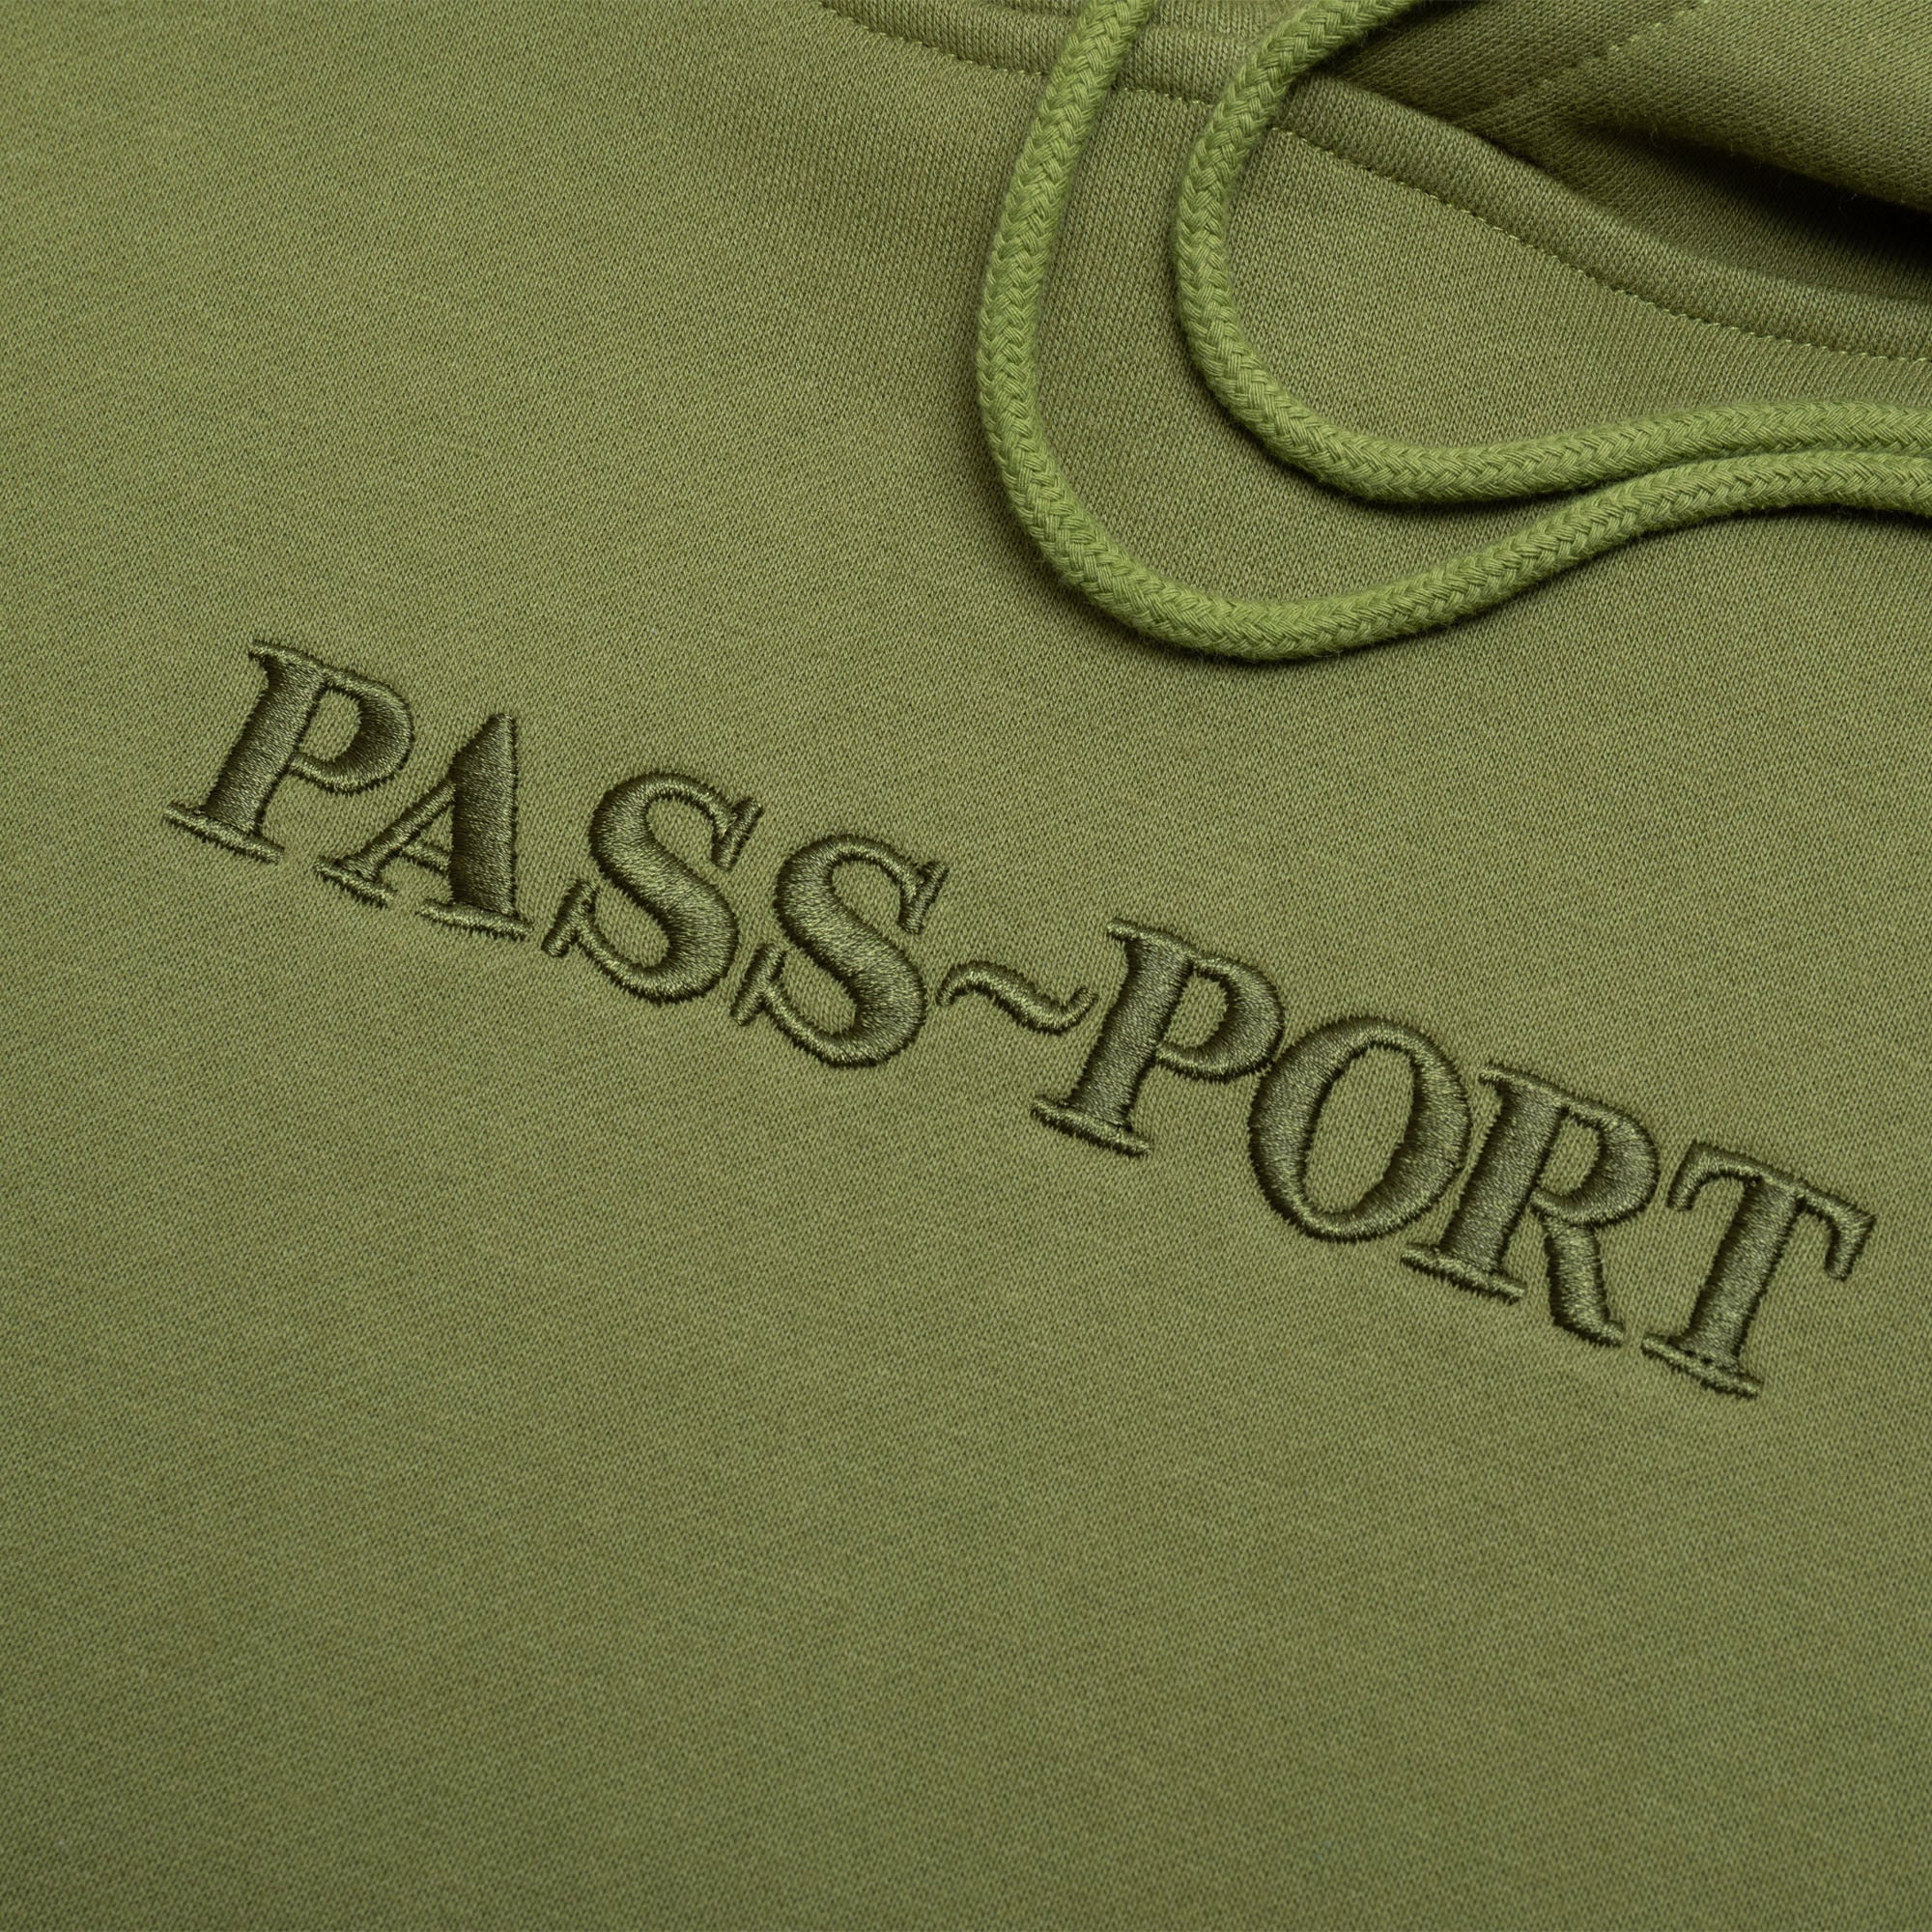 PassPort Official Contrast Organic Hood Olive